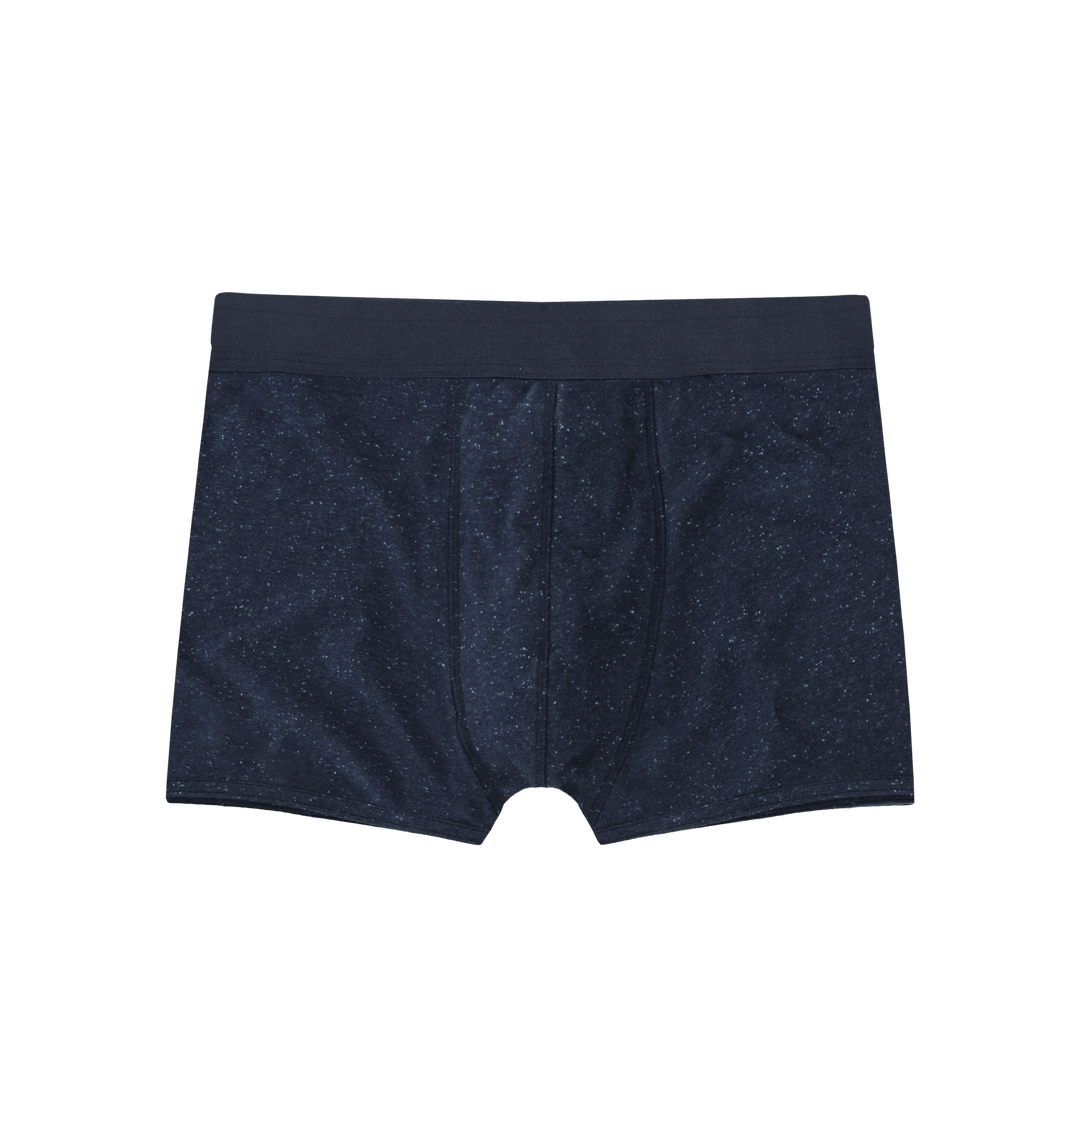 Men's Nepp Boxer Shorts - Socks & Underwear